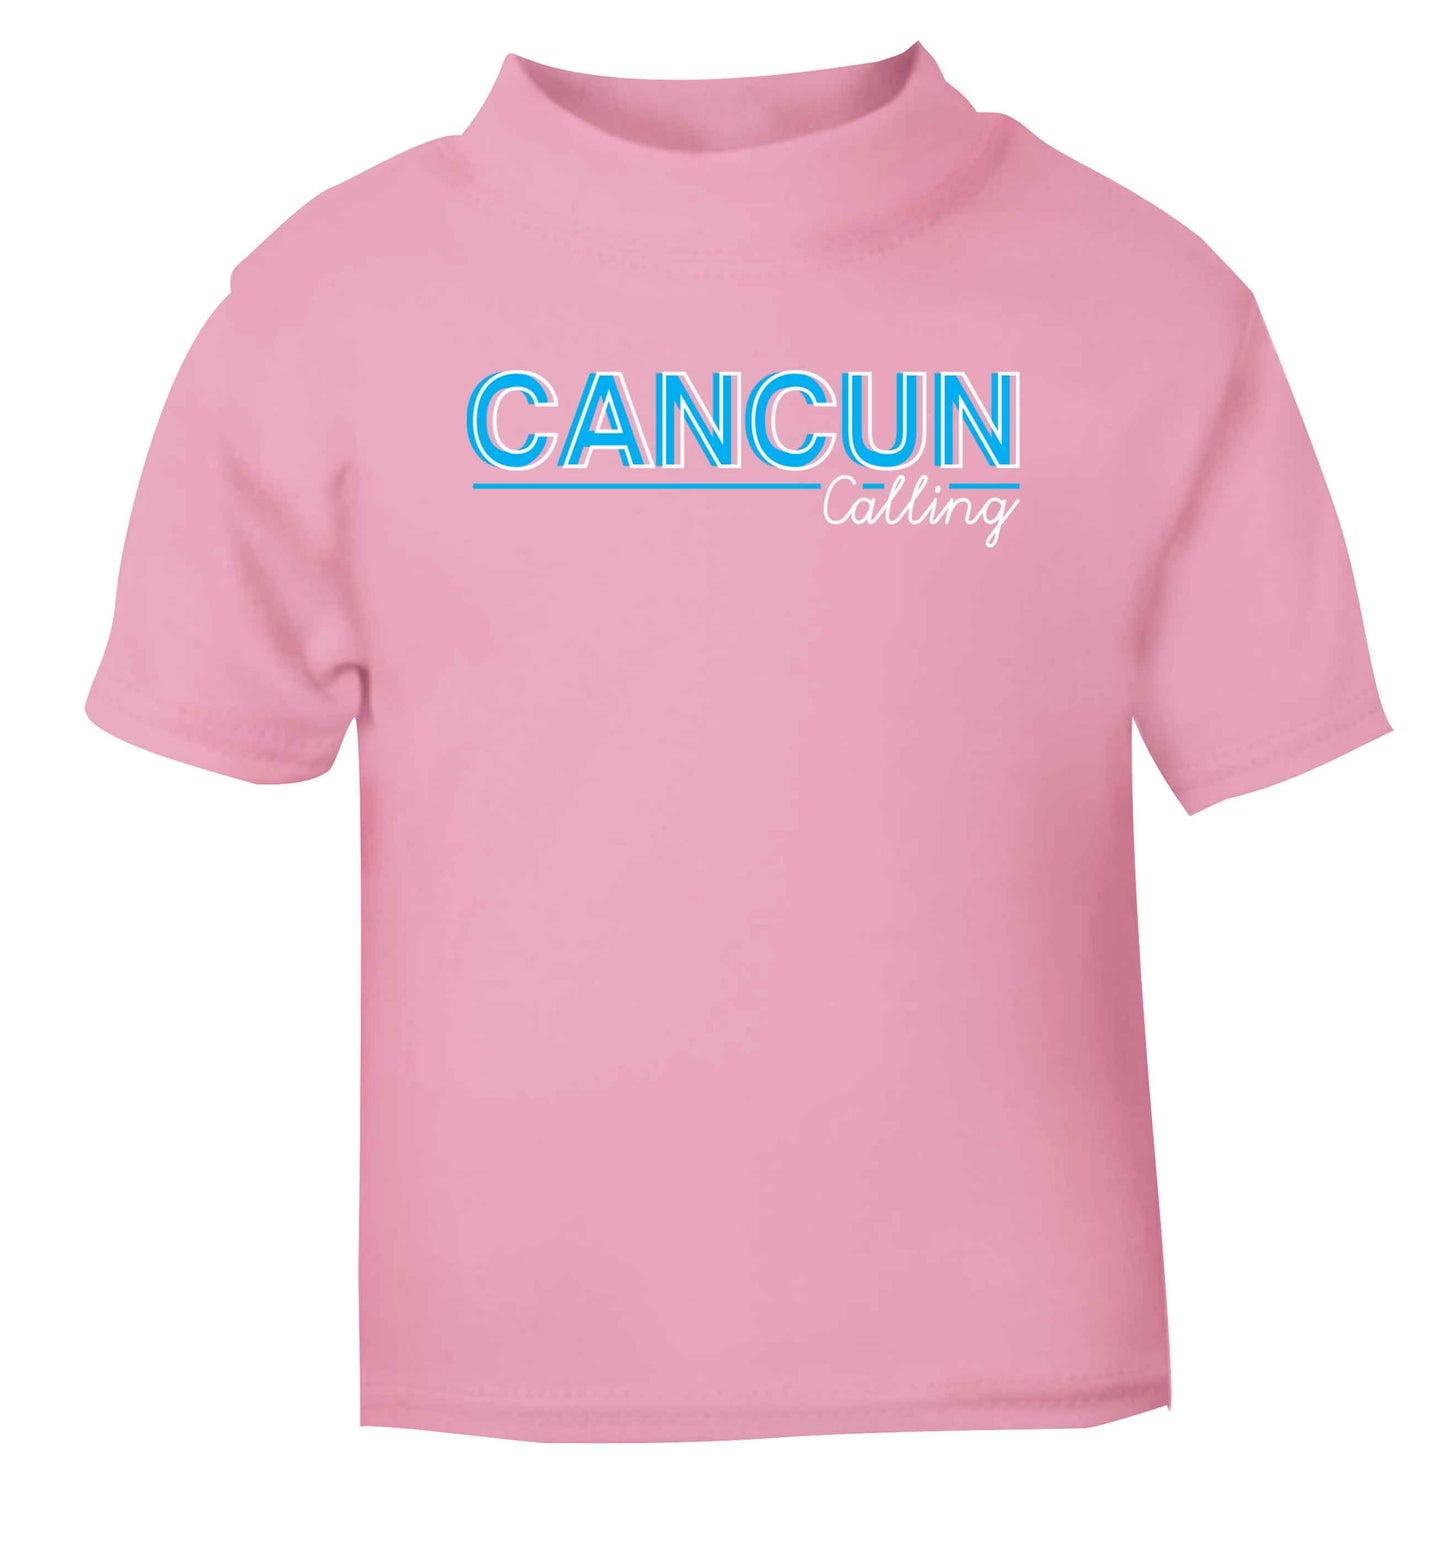 Cancun calling light pink Baby Toddler Tshirt 2 Years